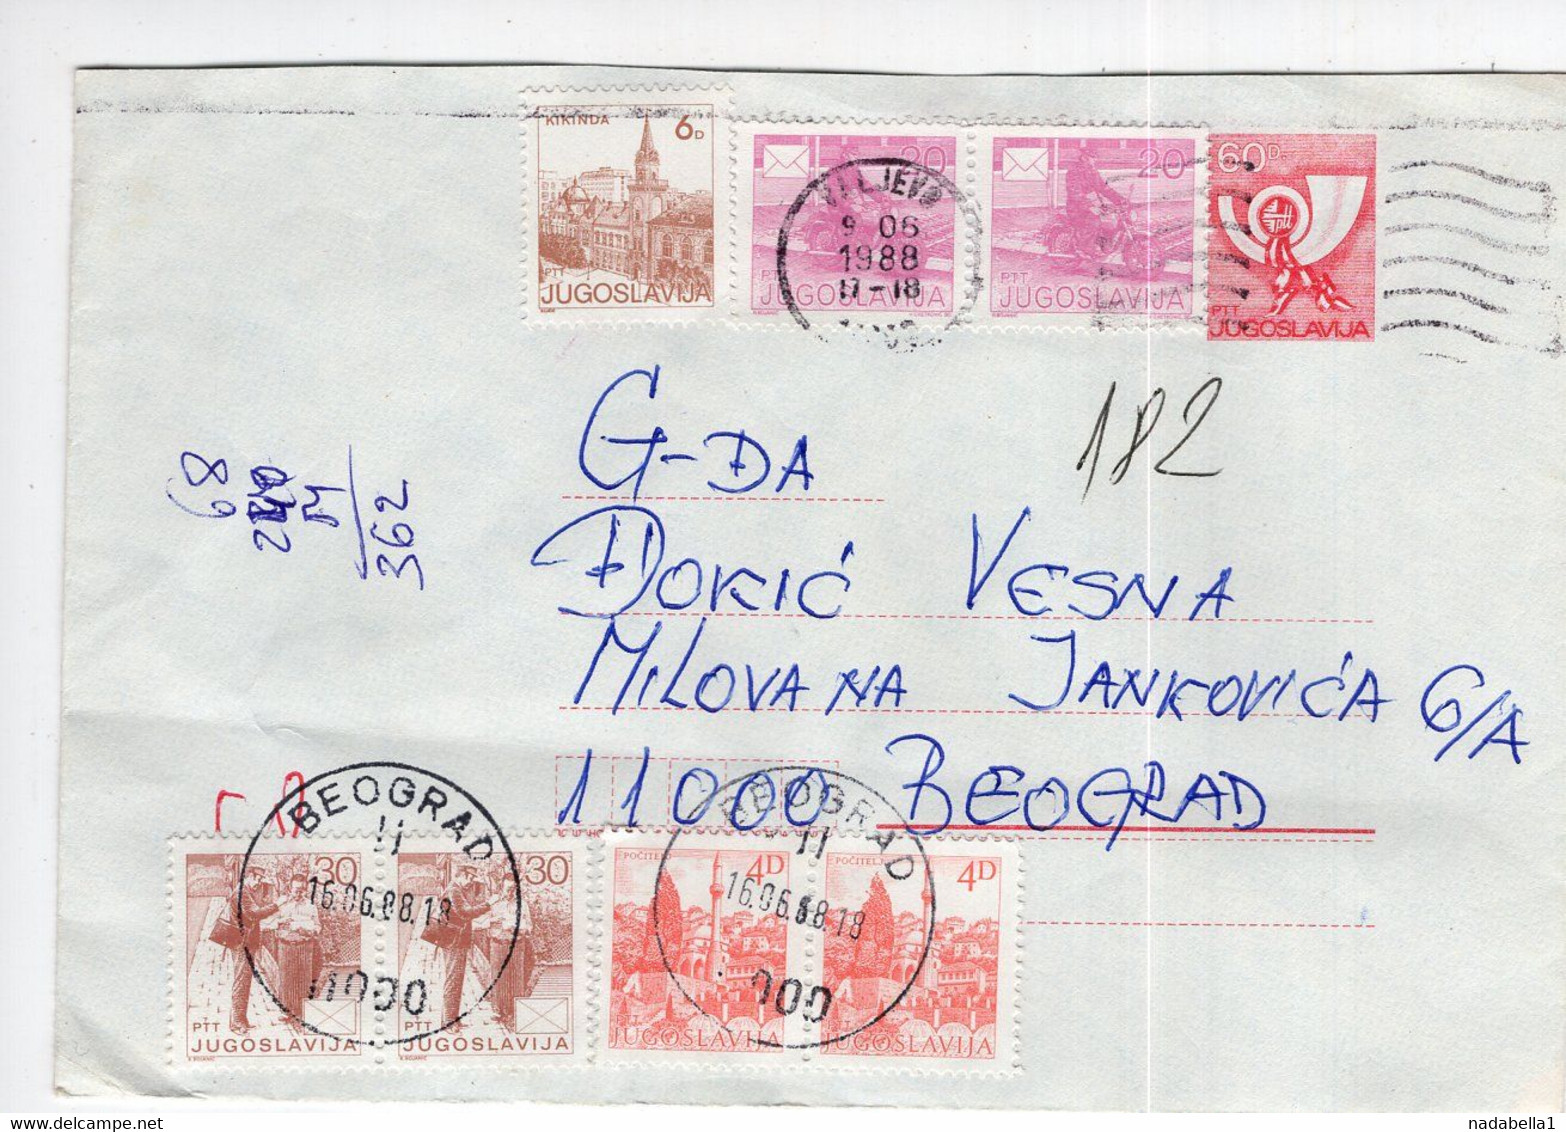 2008. YUGOSLAVIA,SERBIA,VALJEVO,STATIONERY COVER,USED,38 DIN. POSTAGE DUE PAID IN BELGRADE - Postage Due